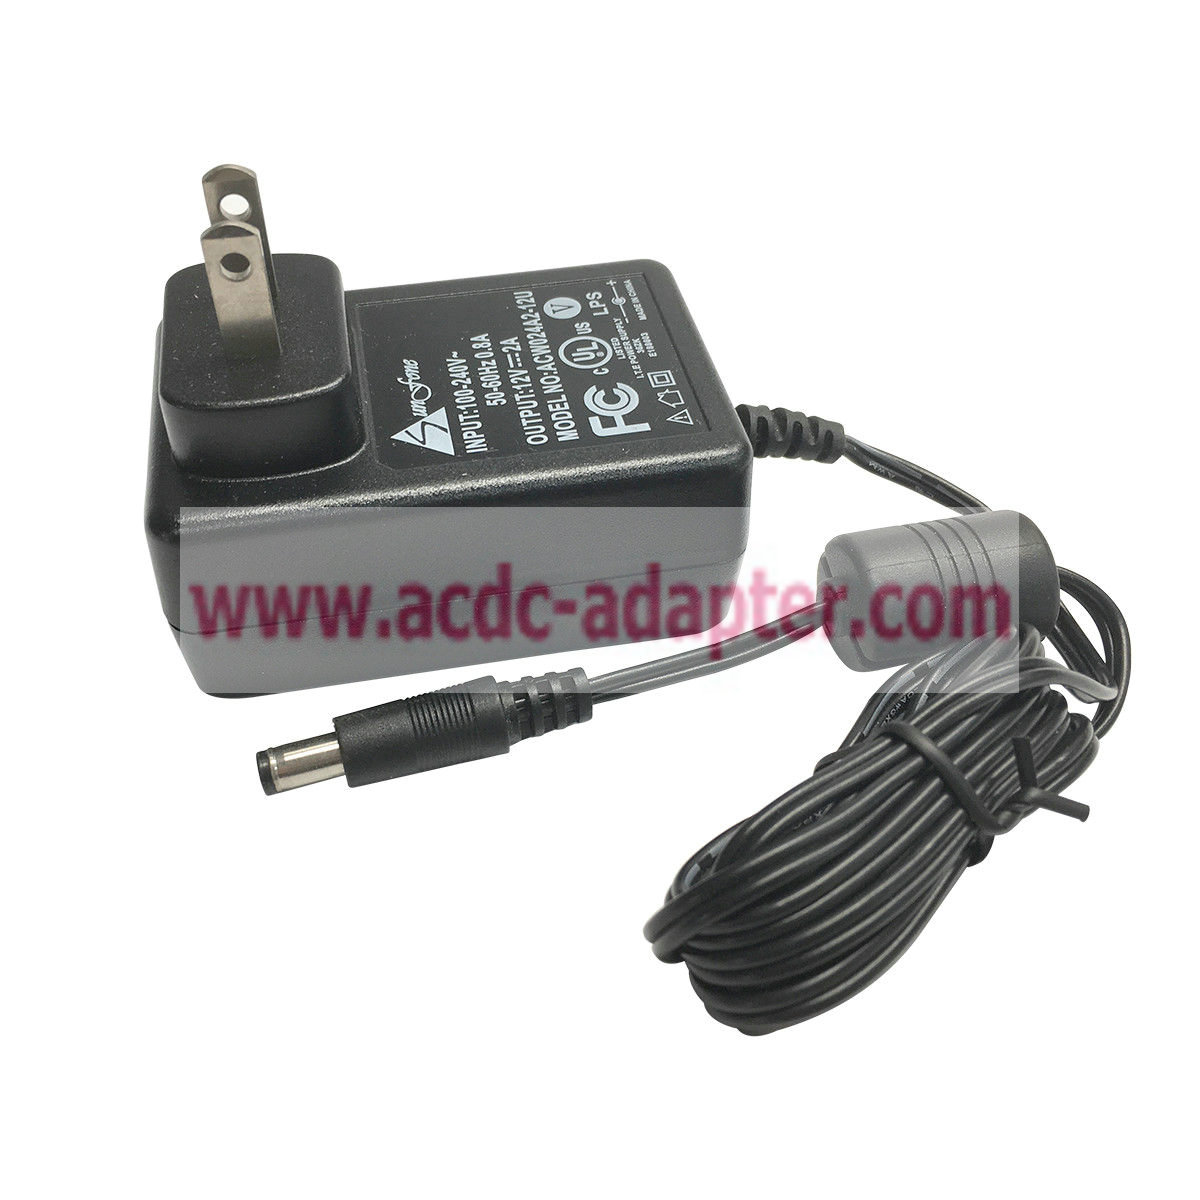 NEW Sunfone ACW024A2-12U 12V 2A AC Power Adapter for External Hard Drive Enclosure